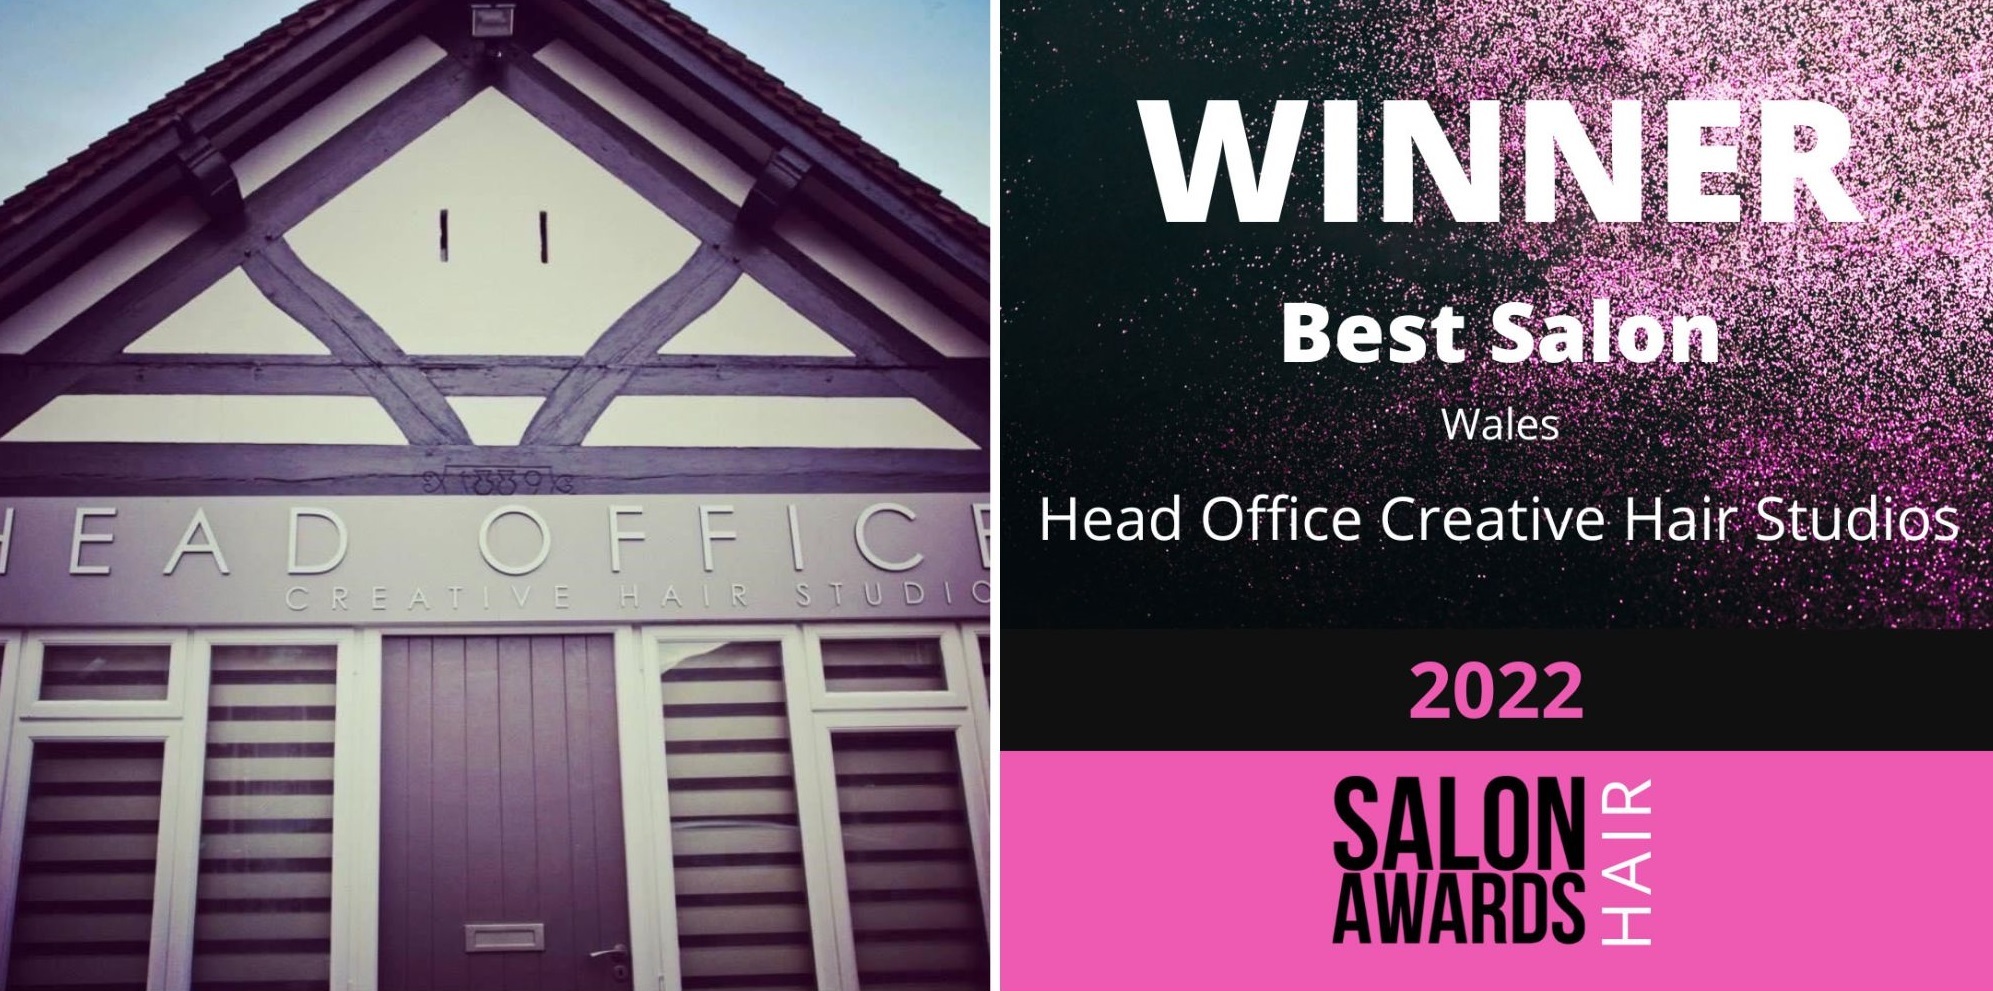 Award-winning Head Office Creative Hair Studios.